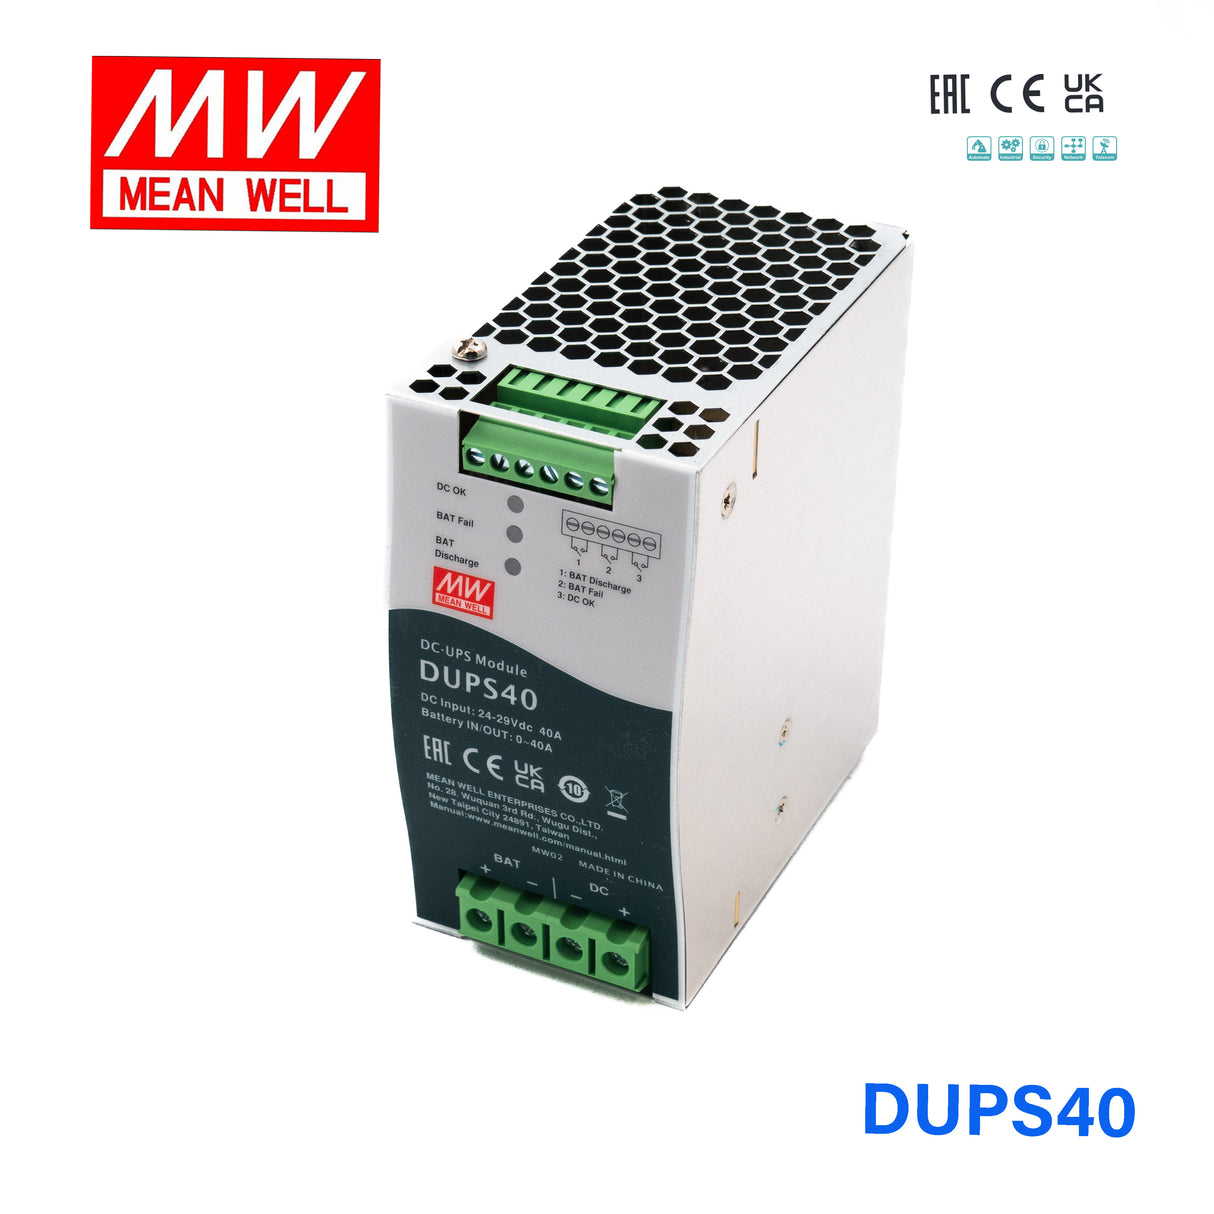 Mean Well DUPS40 DIN Series Uninterruptible DC-UPS Module 40A